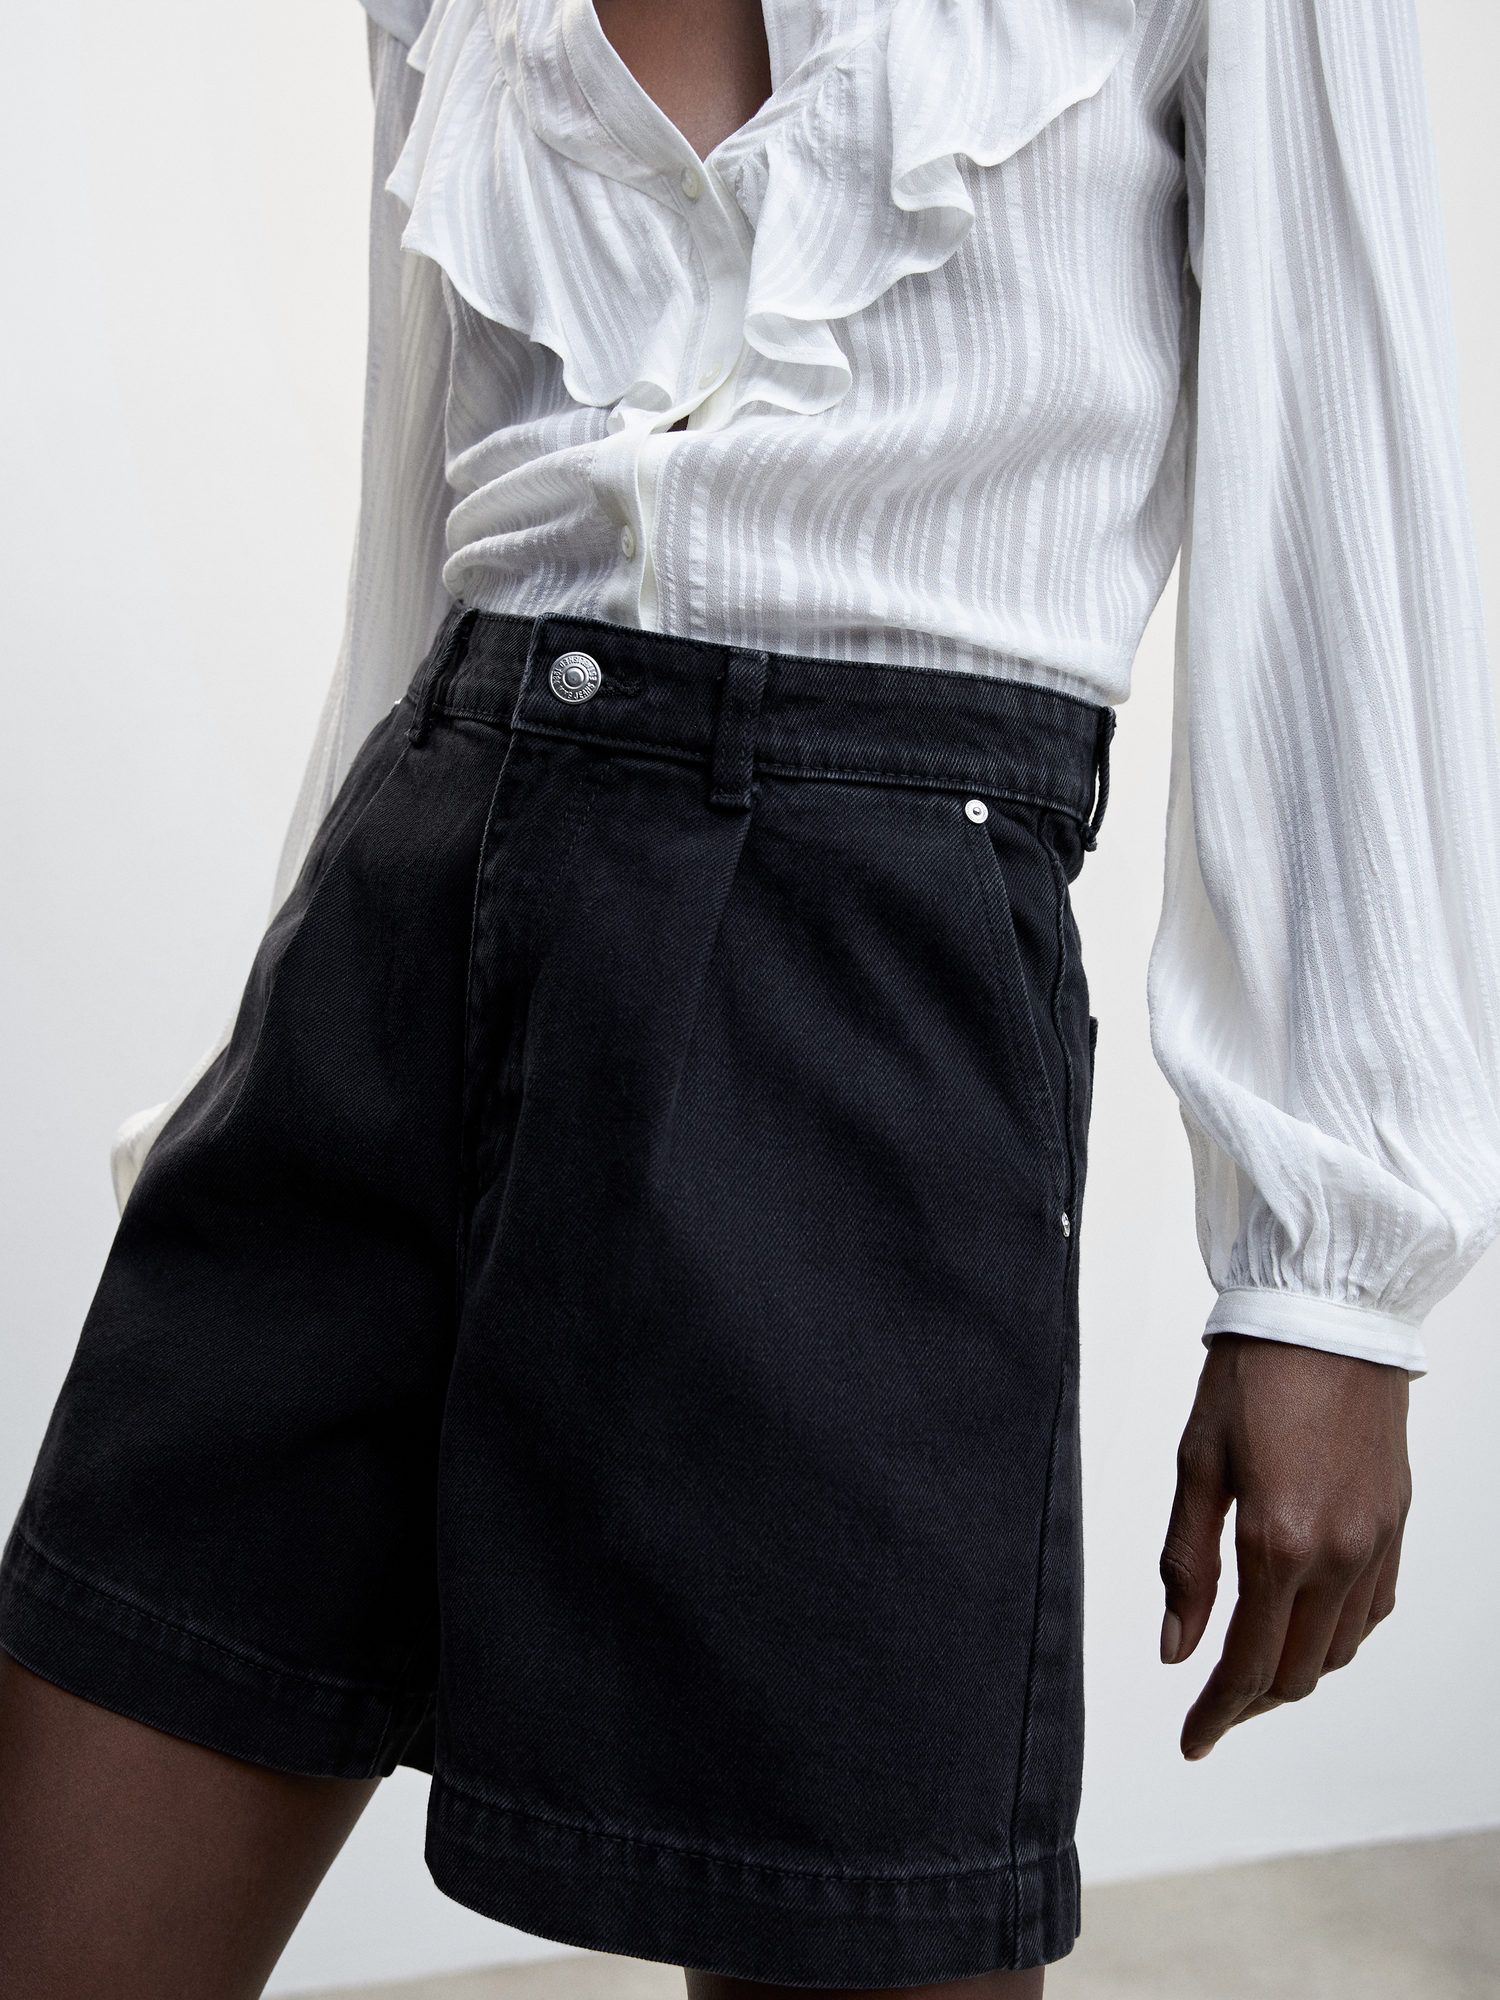 Zara - Paperbag Waist Denim Shorts - Light Blue - Unisex